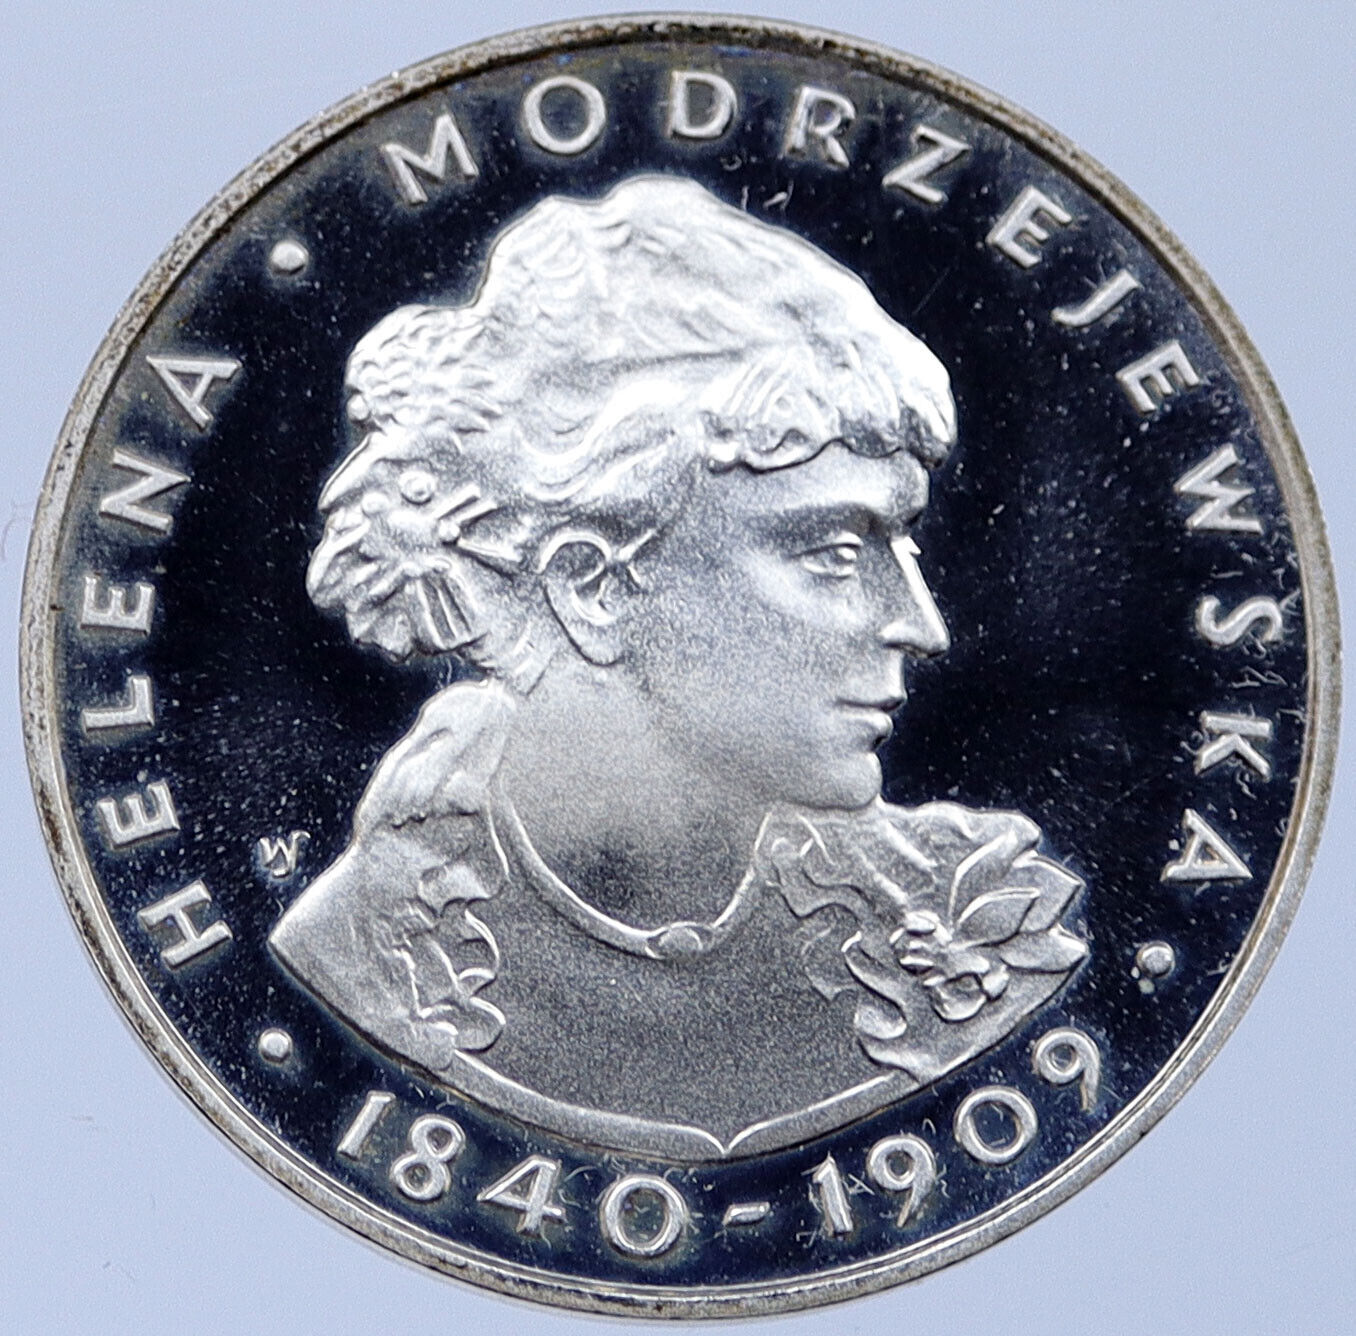 1975 Poland Acress Helena Modrzejewska Commemorative Proof Silver Coin i119109